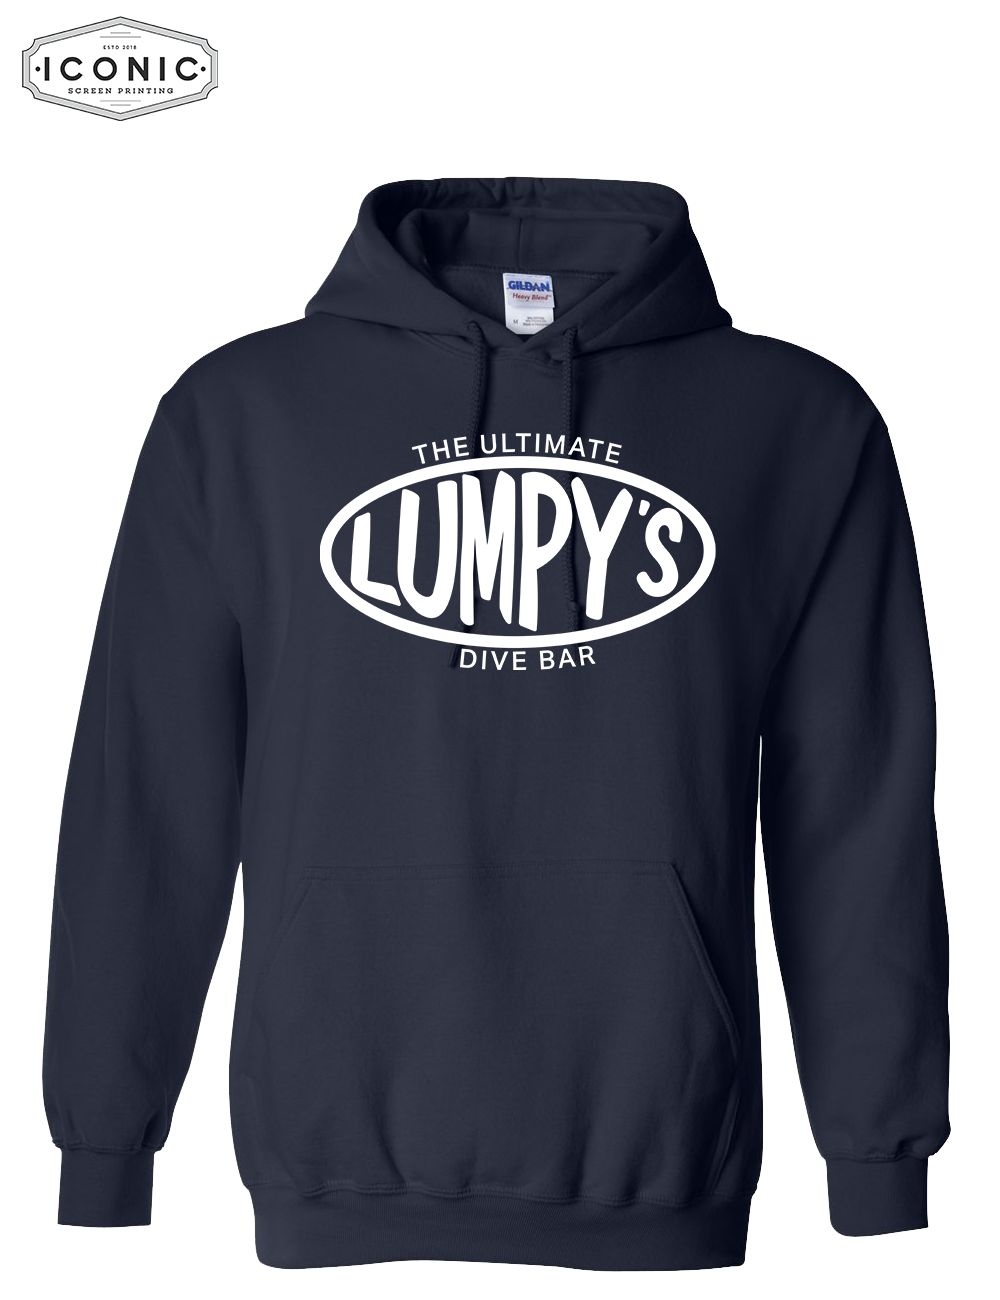 LUMPY'S Dive Bar - D5 - Heavy Blend Hooded Sweatshirt